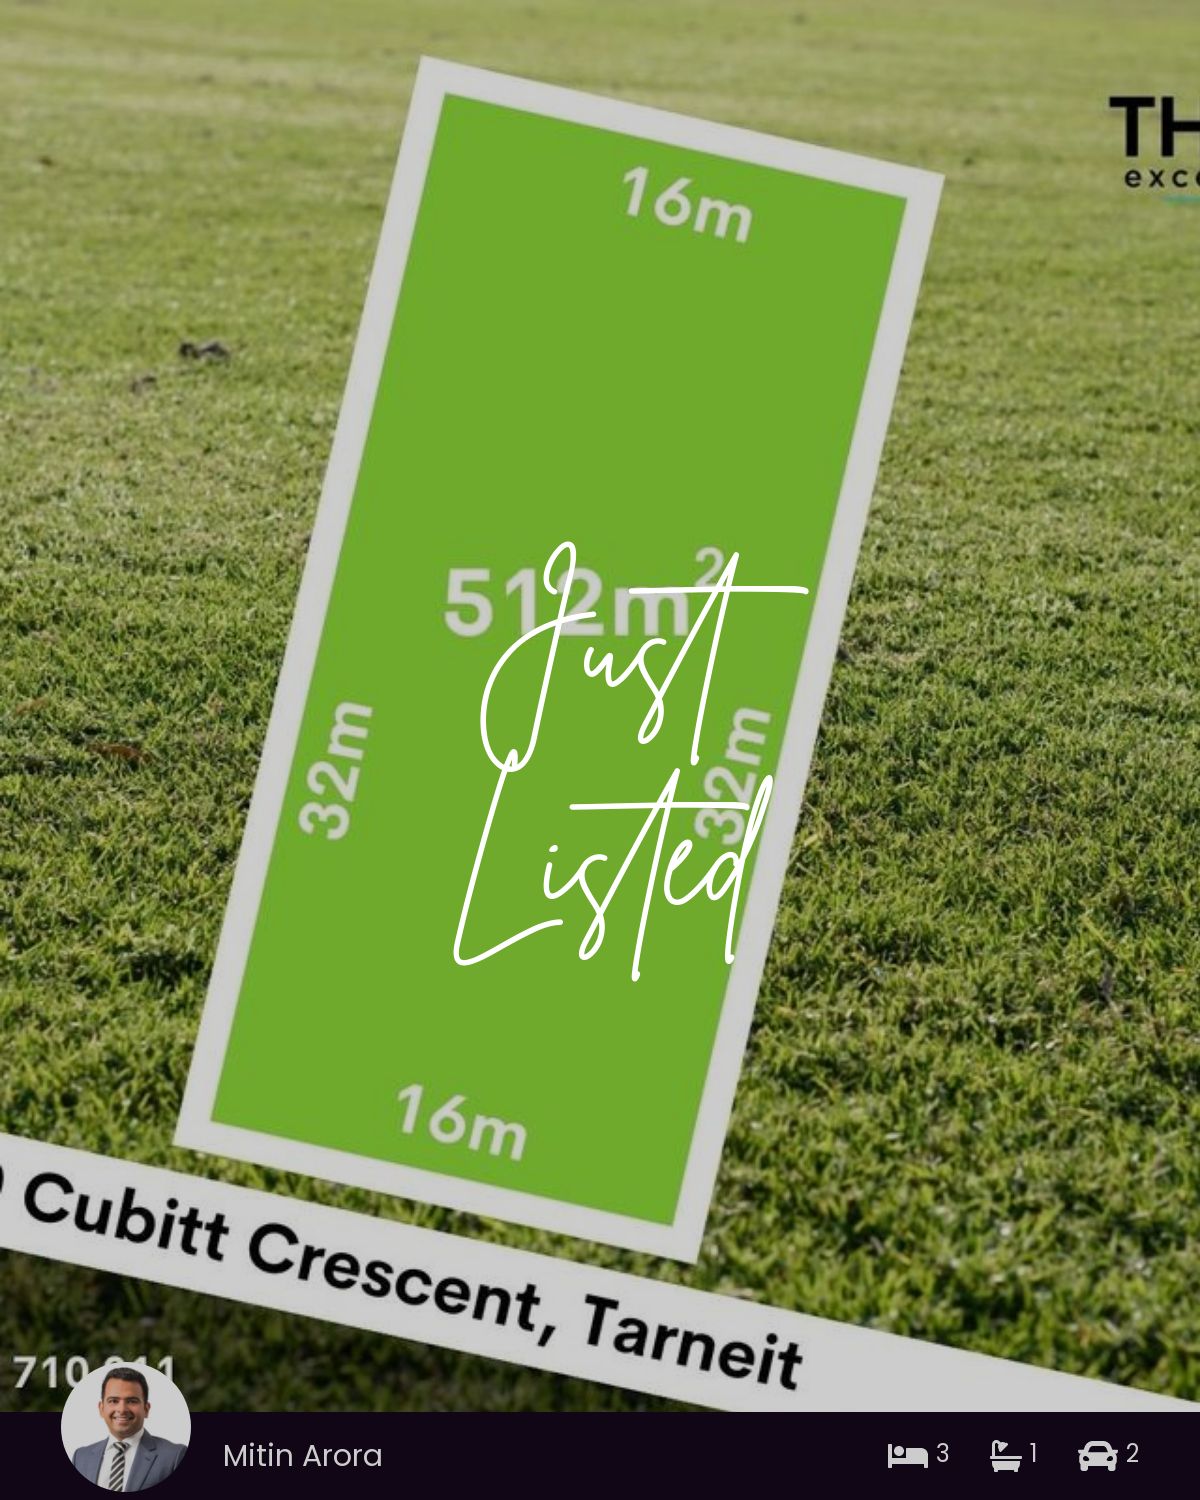 10 Cubitt Crescent, Tarneit, VIC 3029 | Realty.com.au